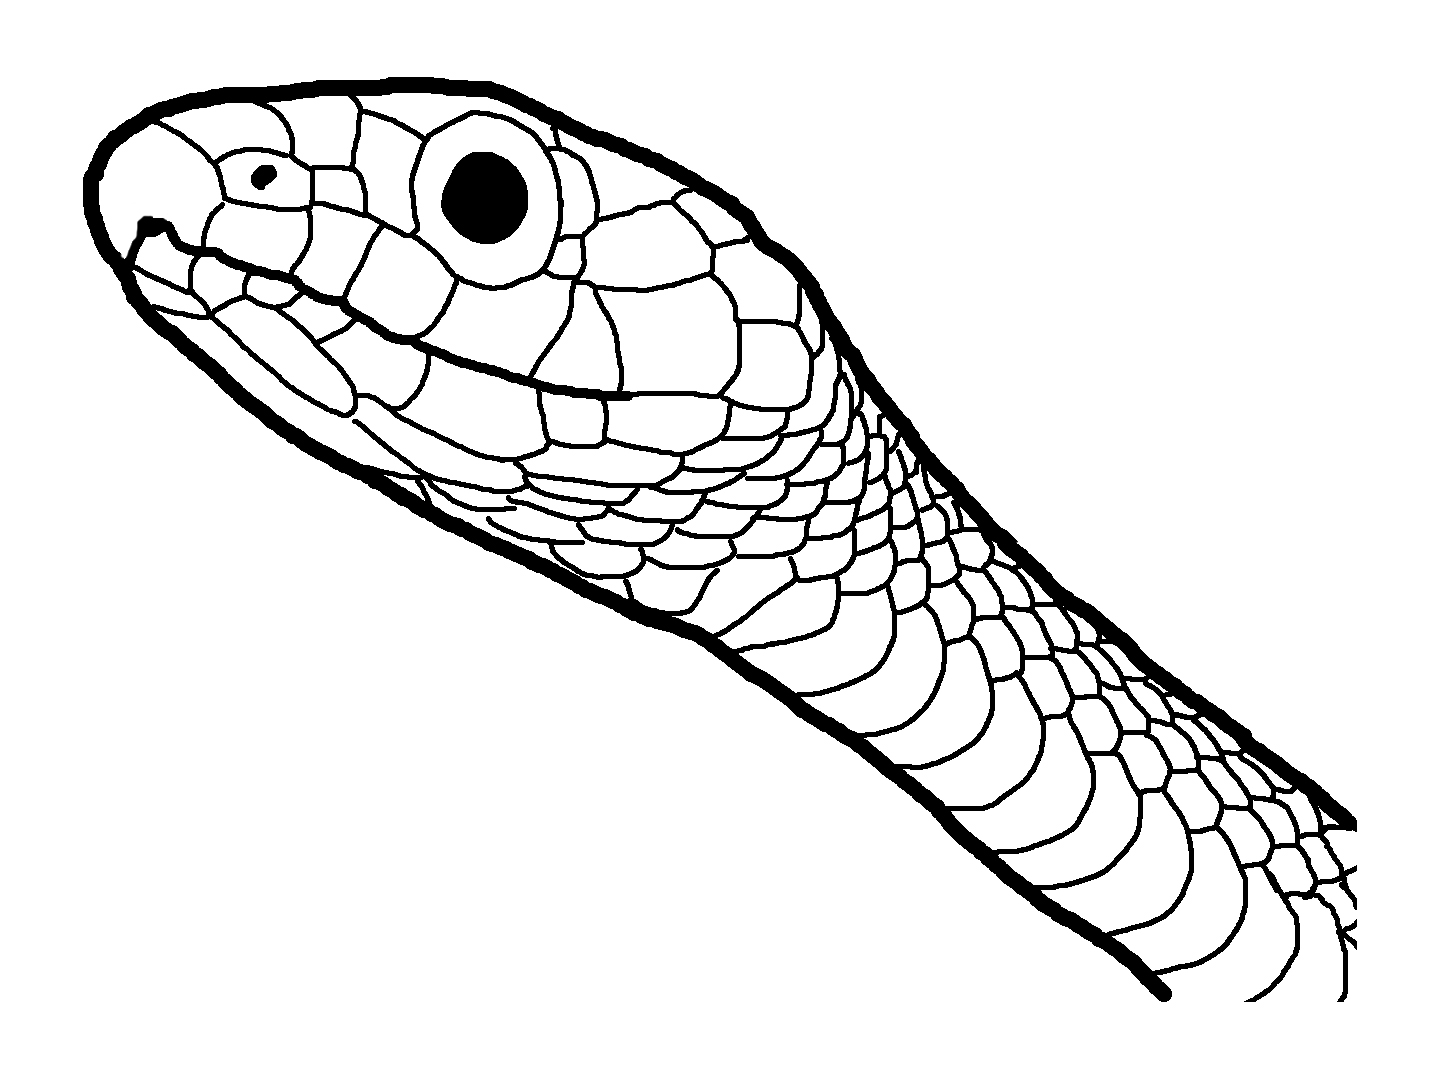 cobra-snake-head-drawing-at-getdrawings-free-download